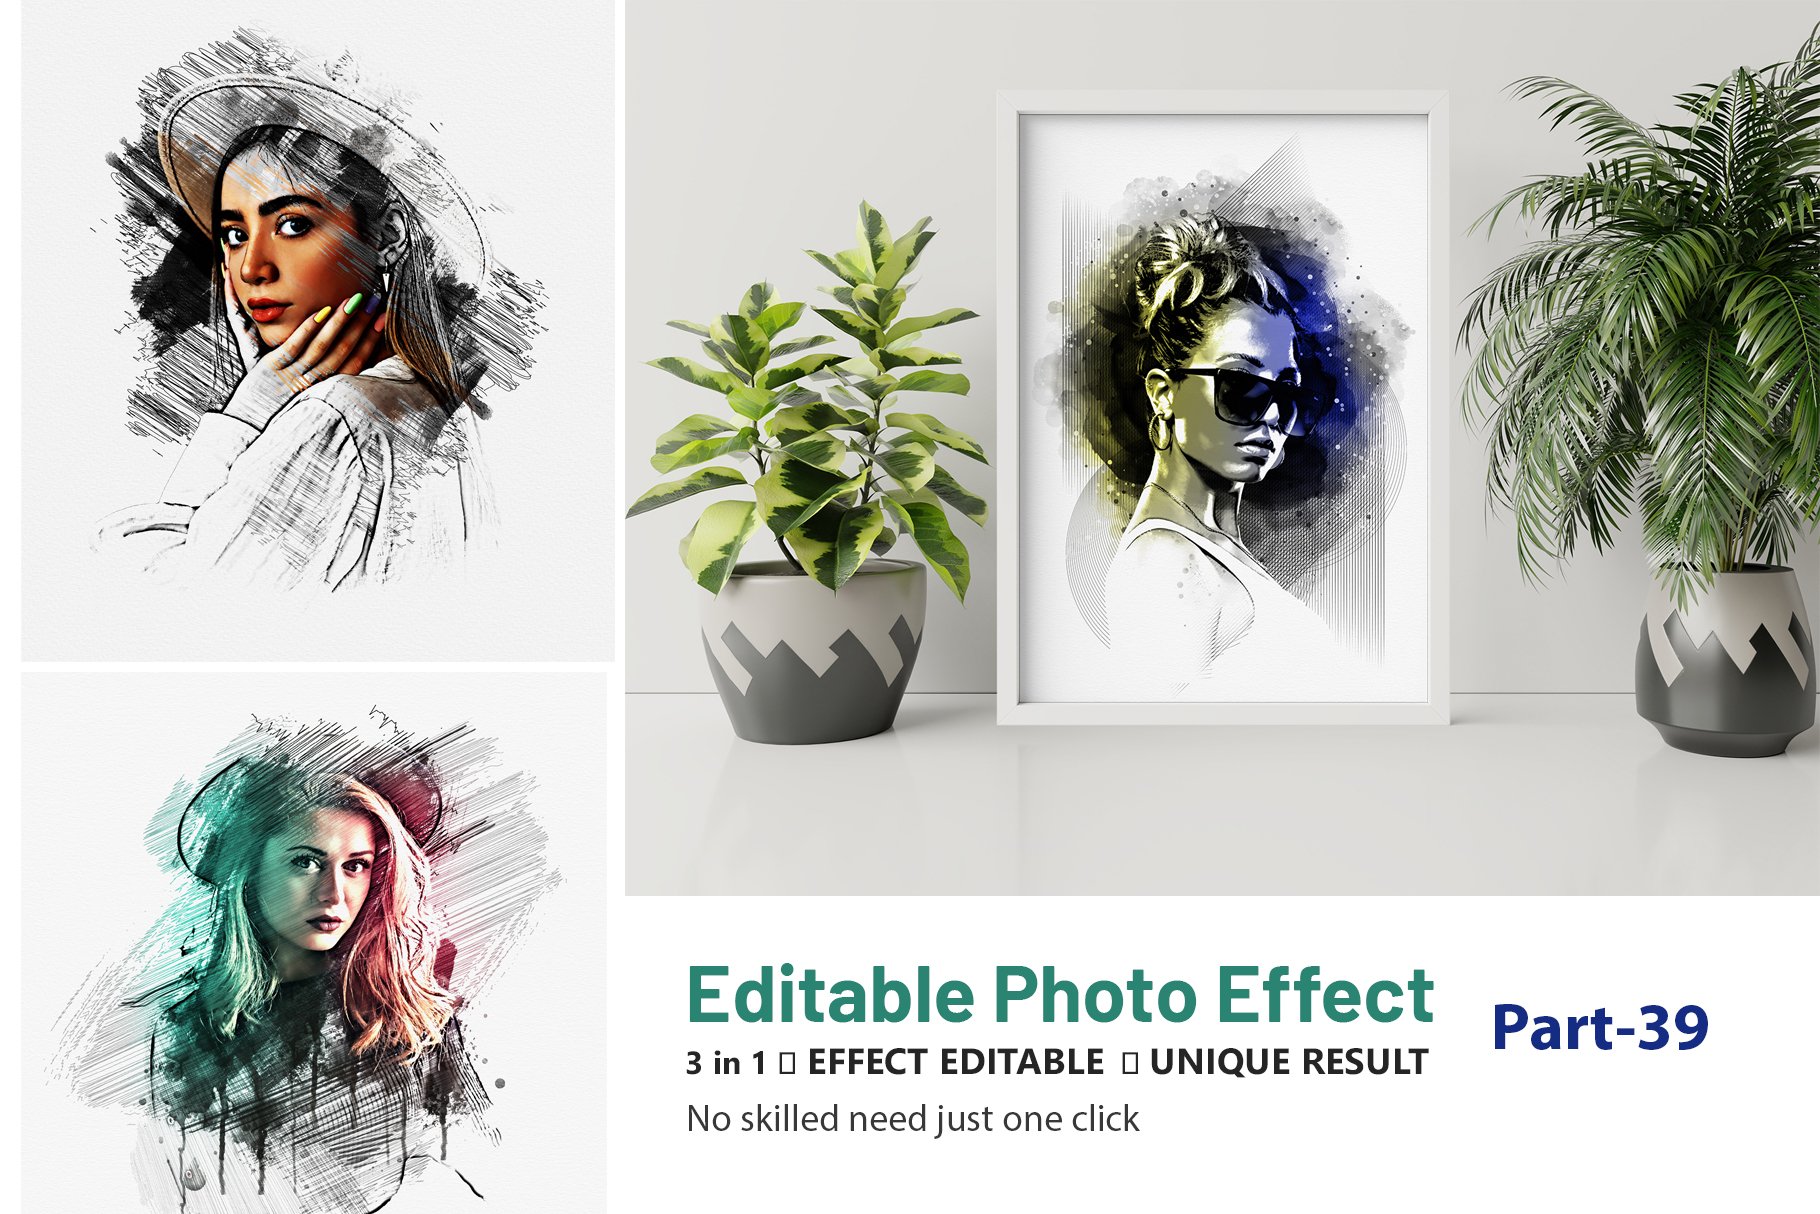 Editable Mix media Art Photo effectcover image.